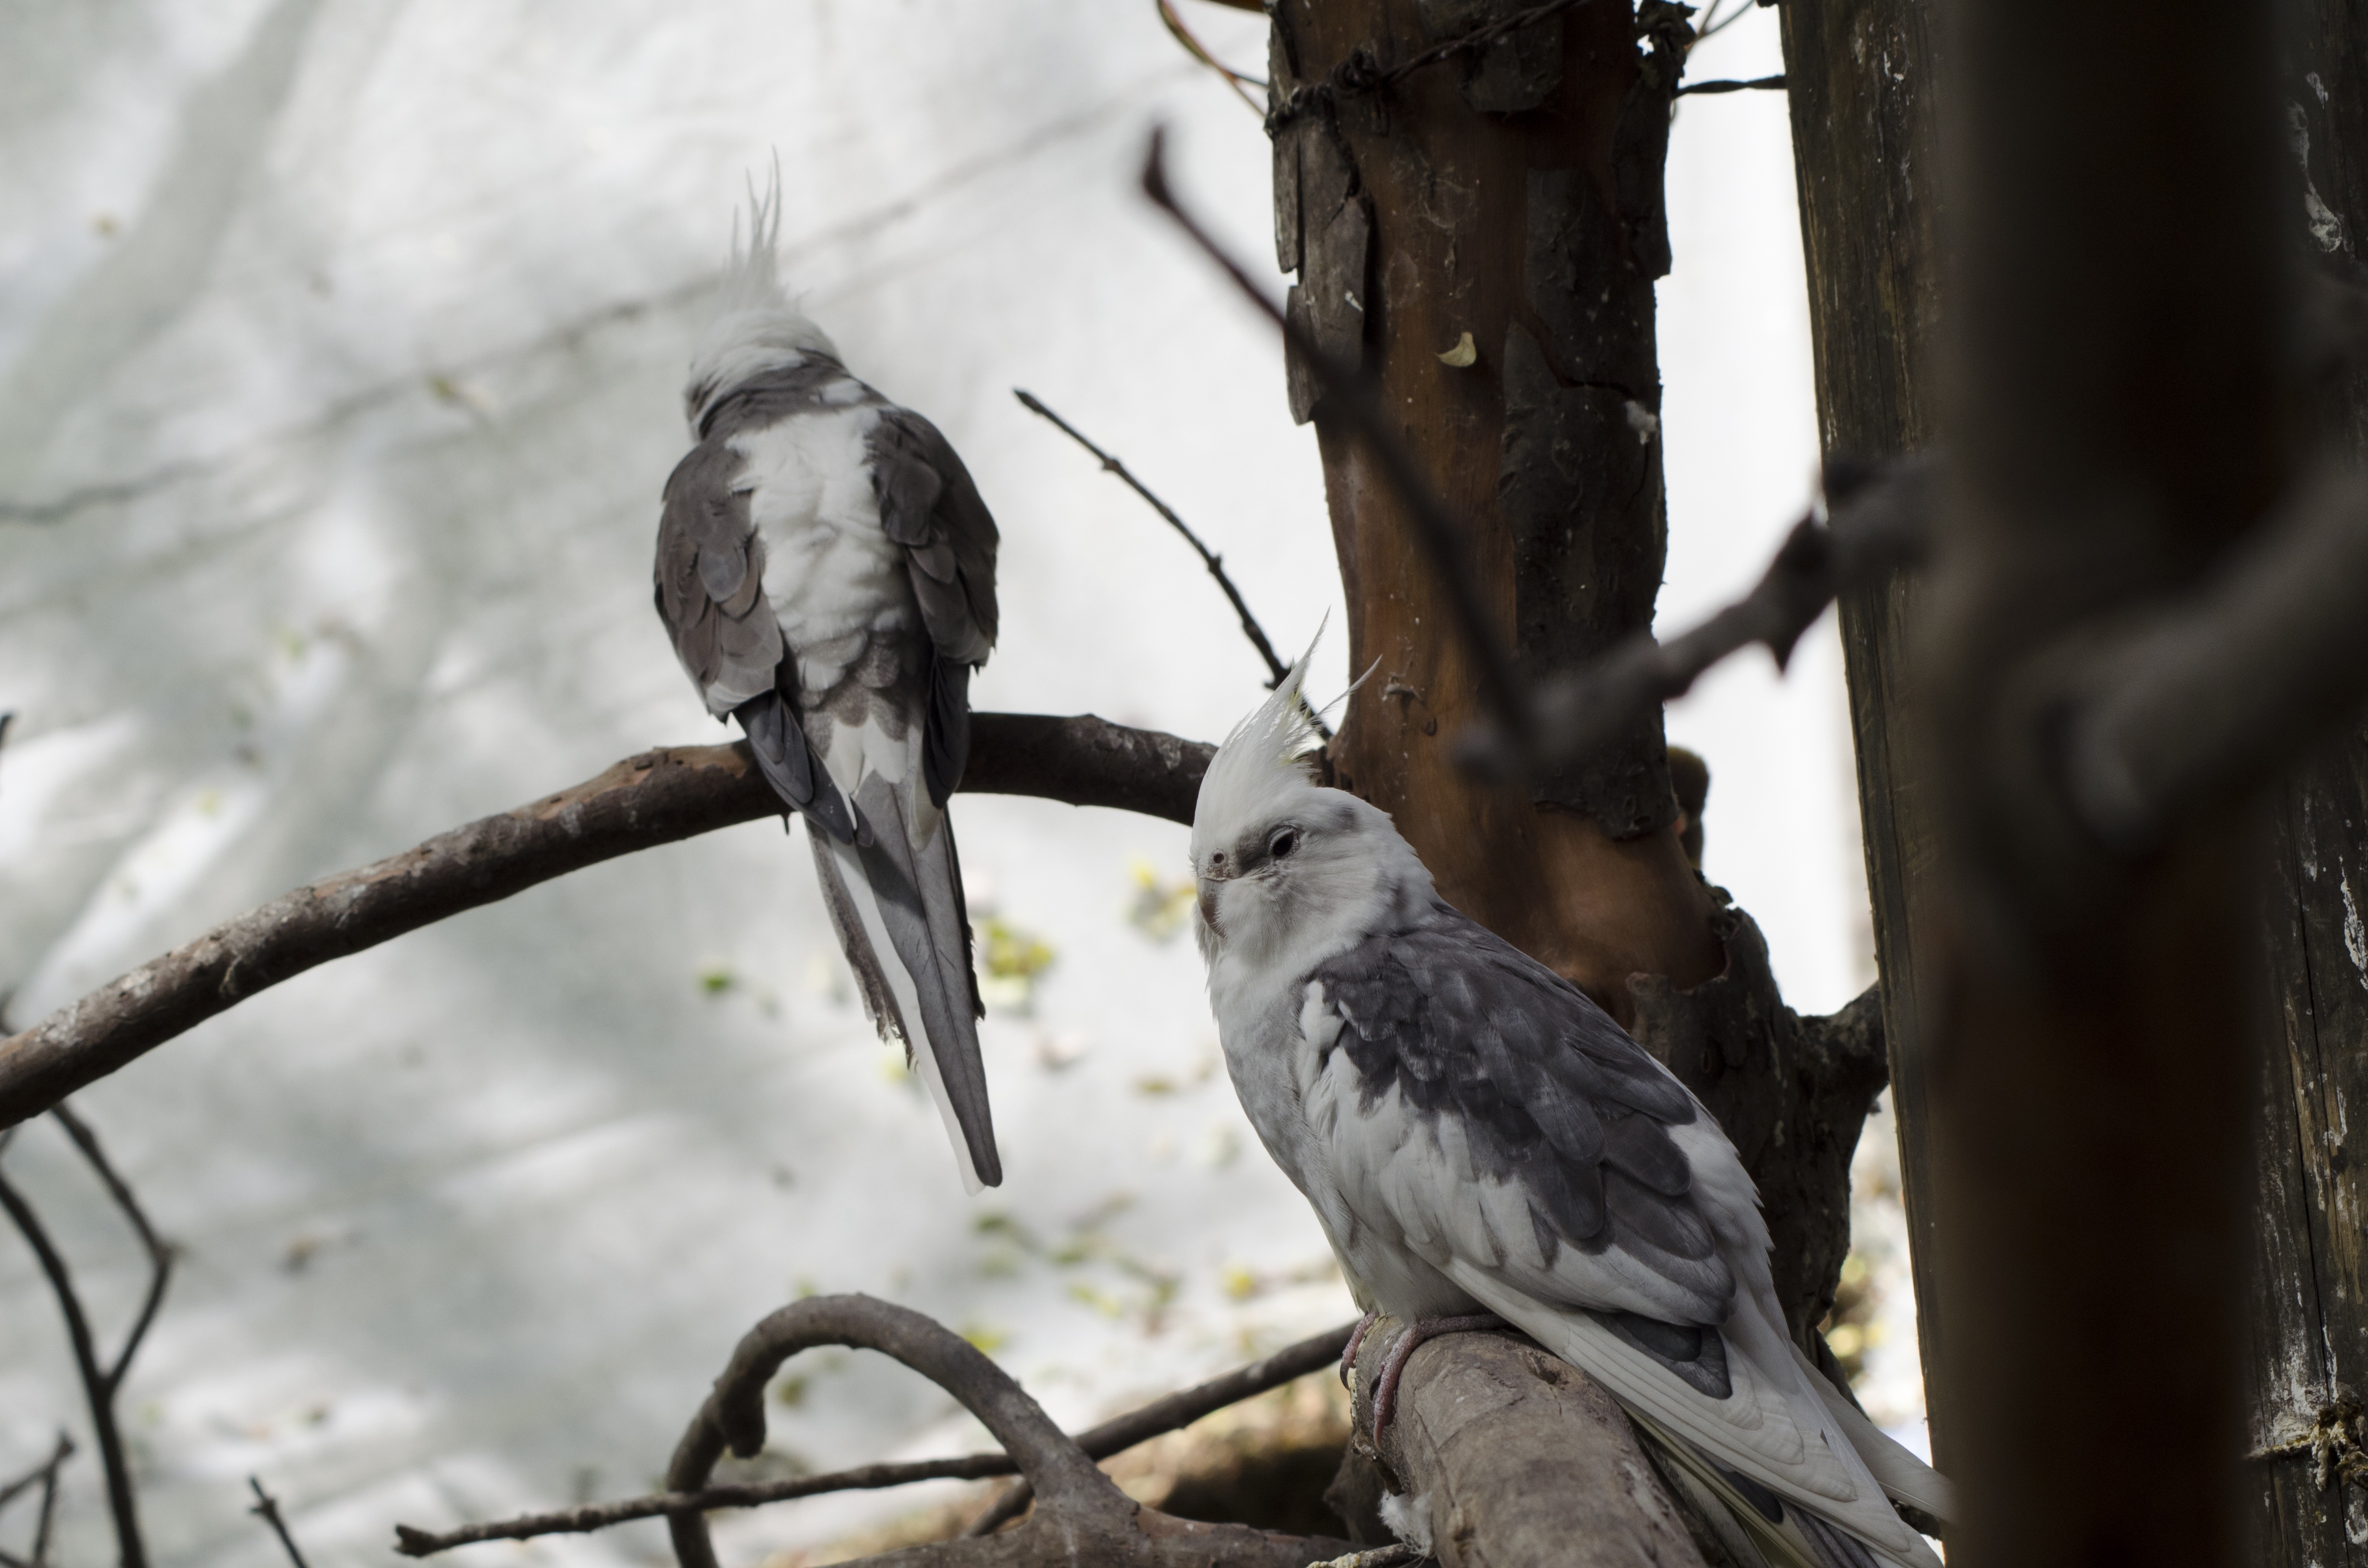 2 white and gray short beak birds